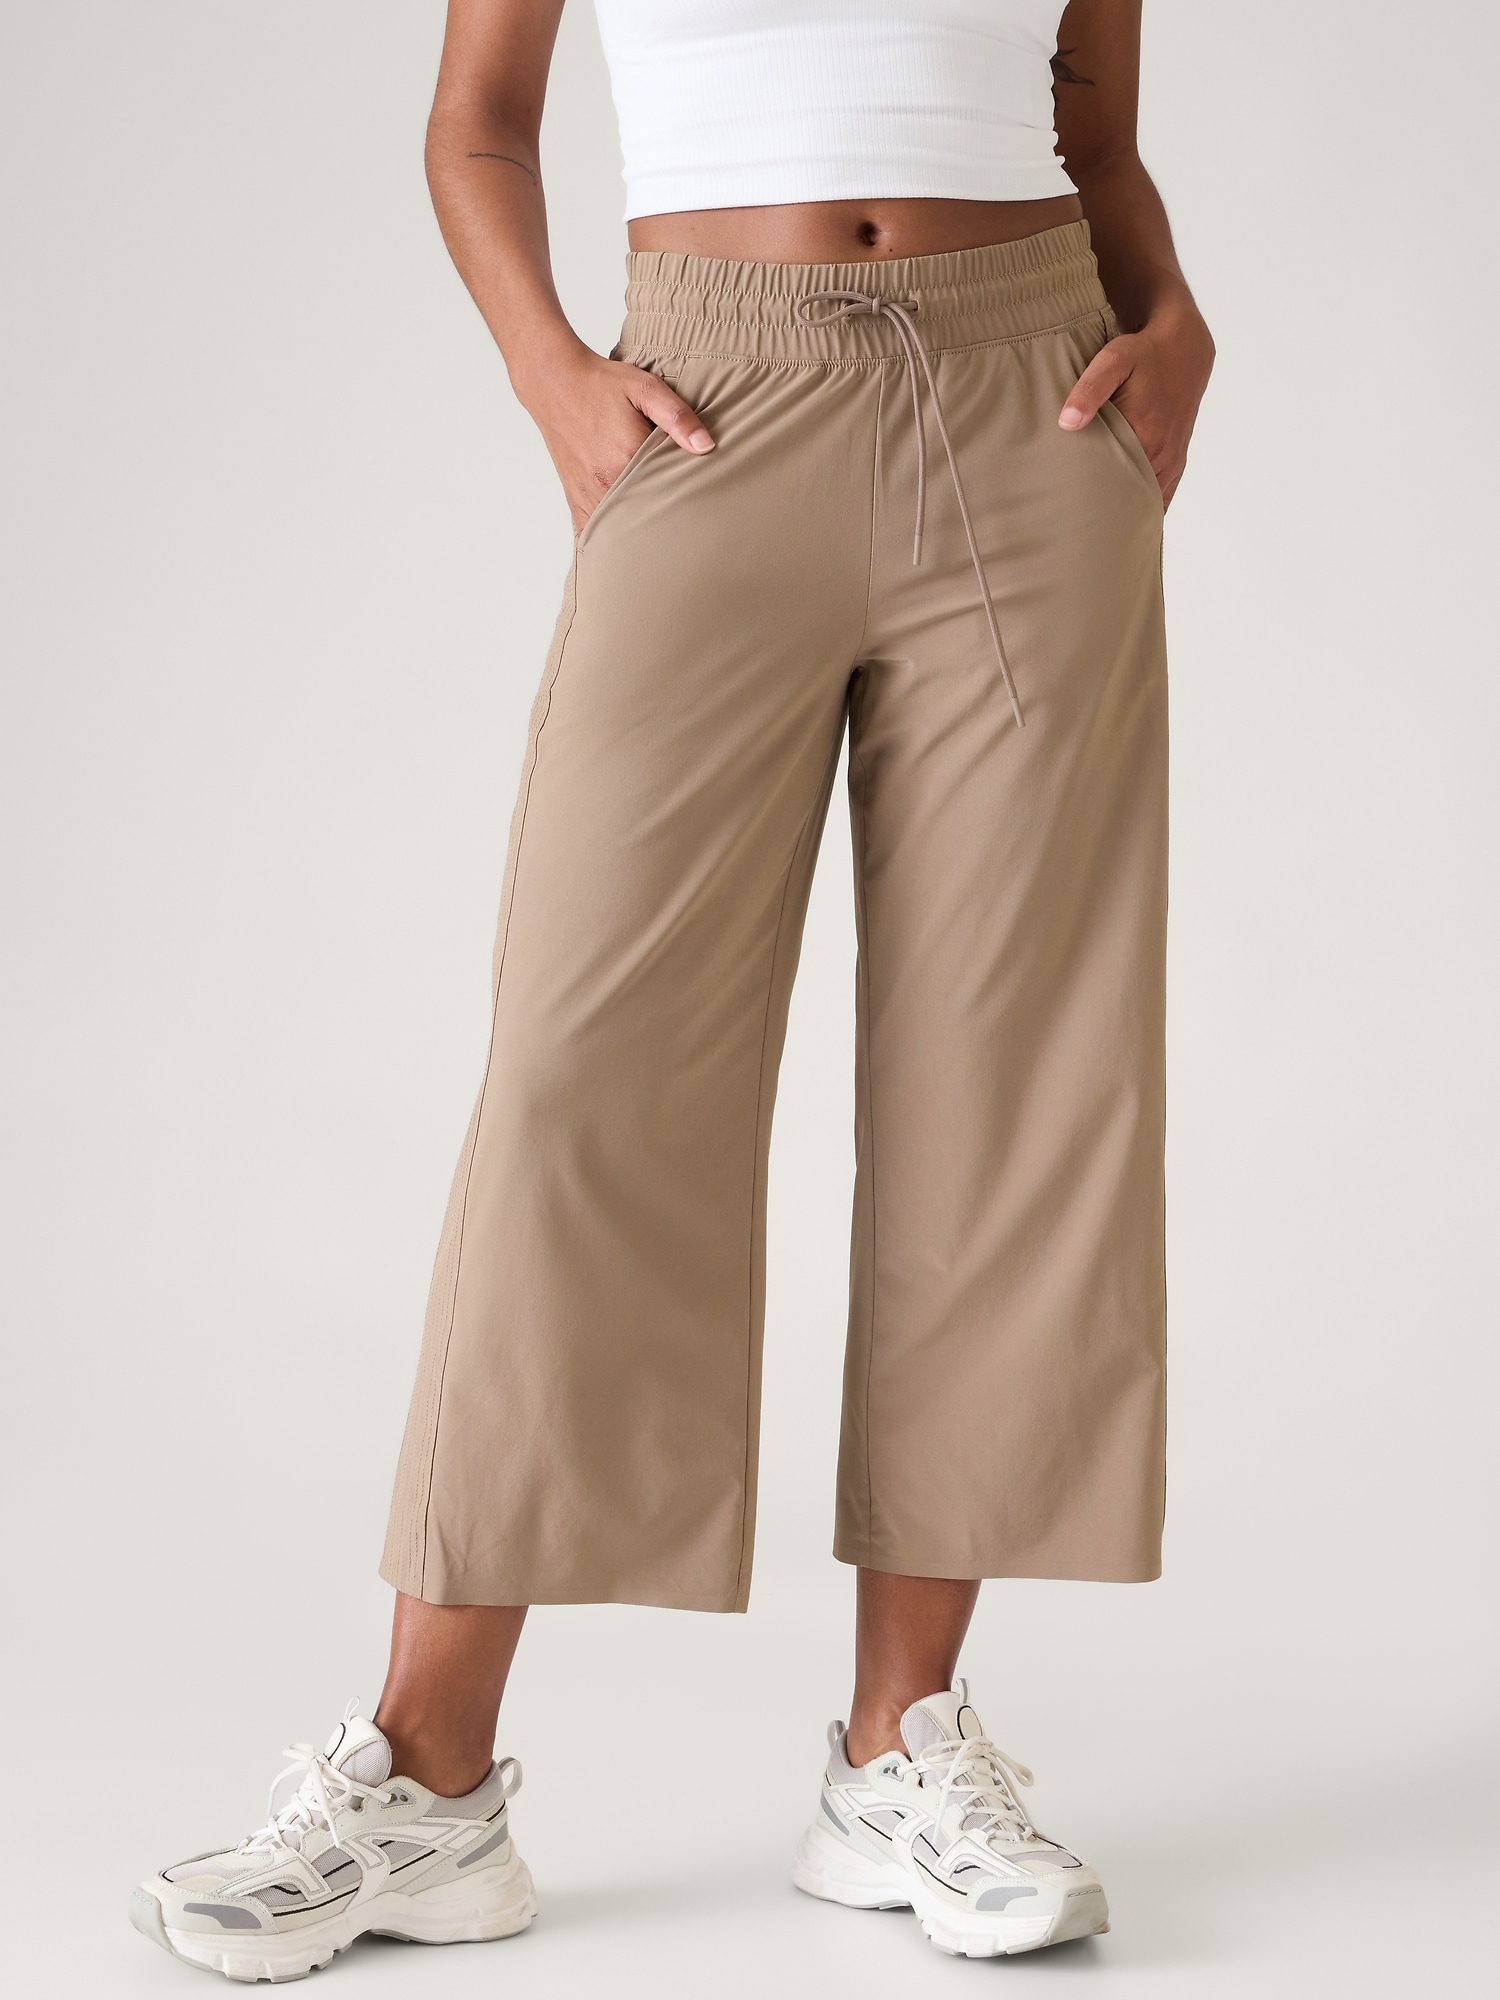 $118 ATHLETA - Black w/ White Stripes Meridian Wide Leg Pants - Women's  Small 🔥